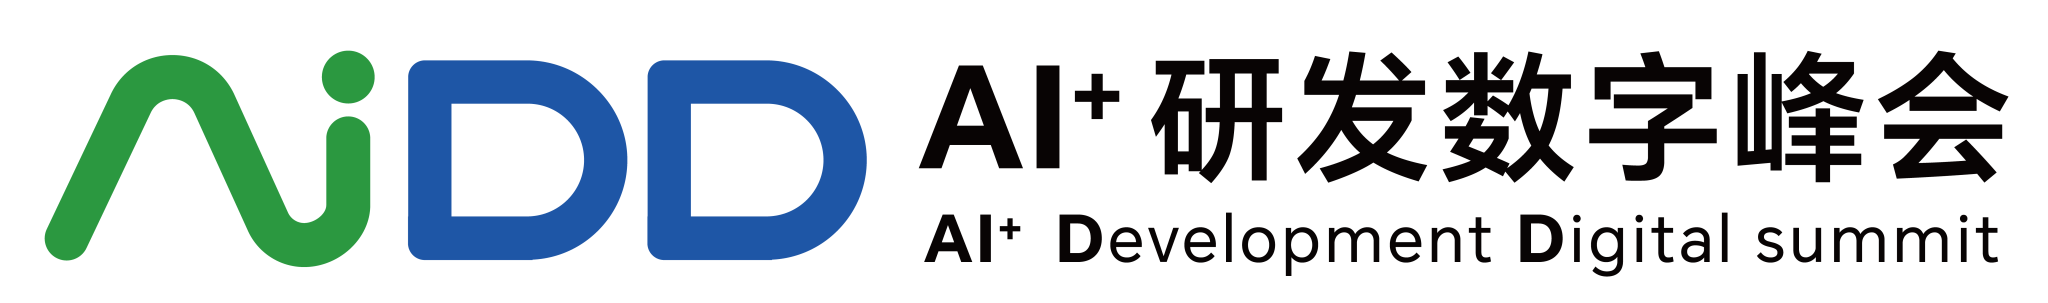 AIDD软件研发数字峰会